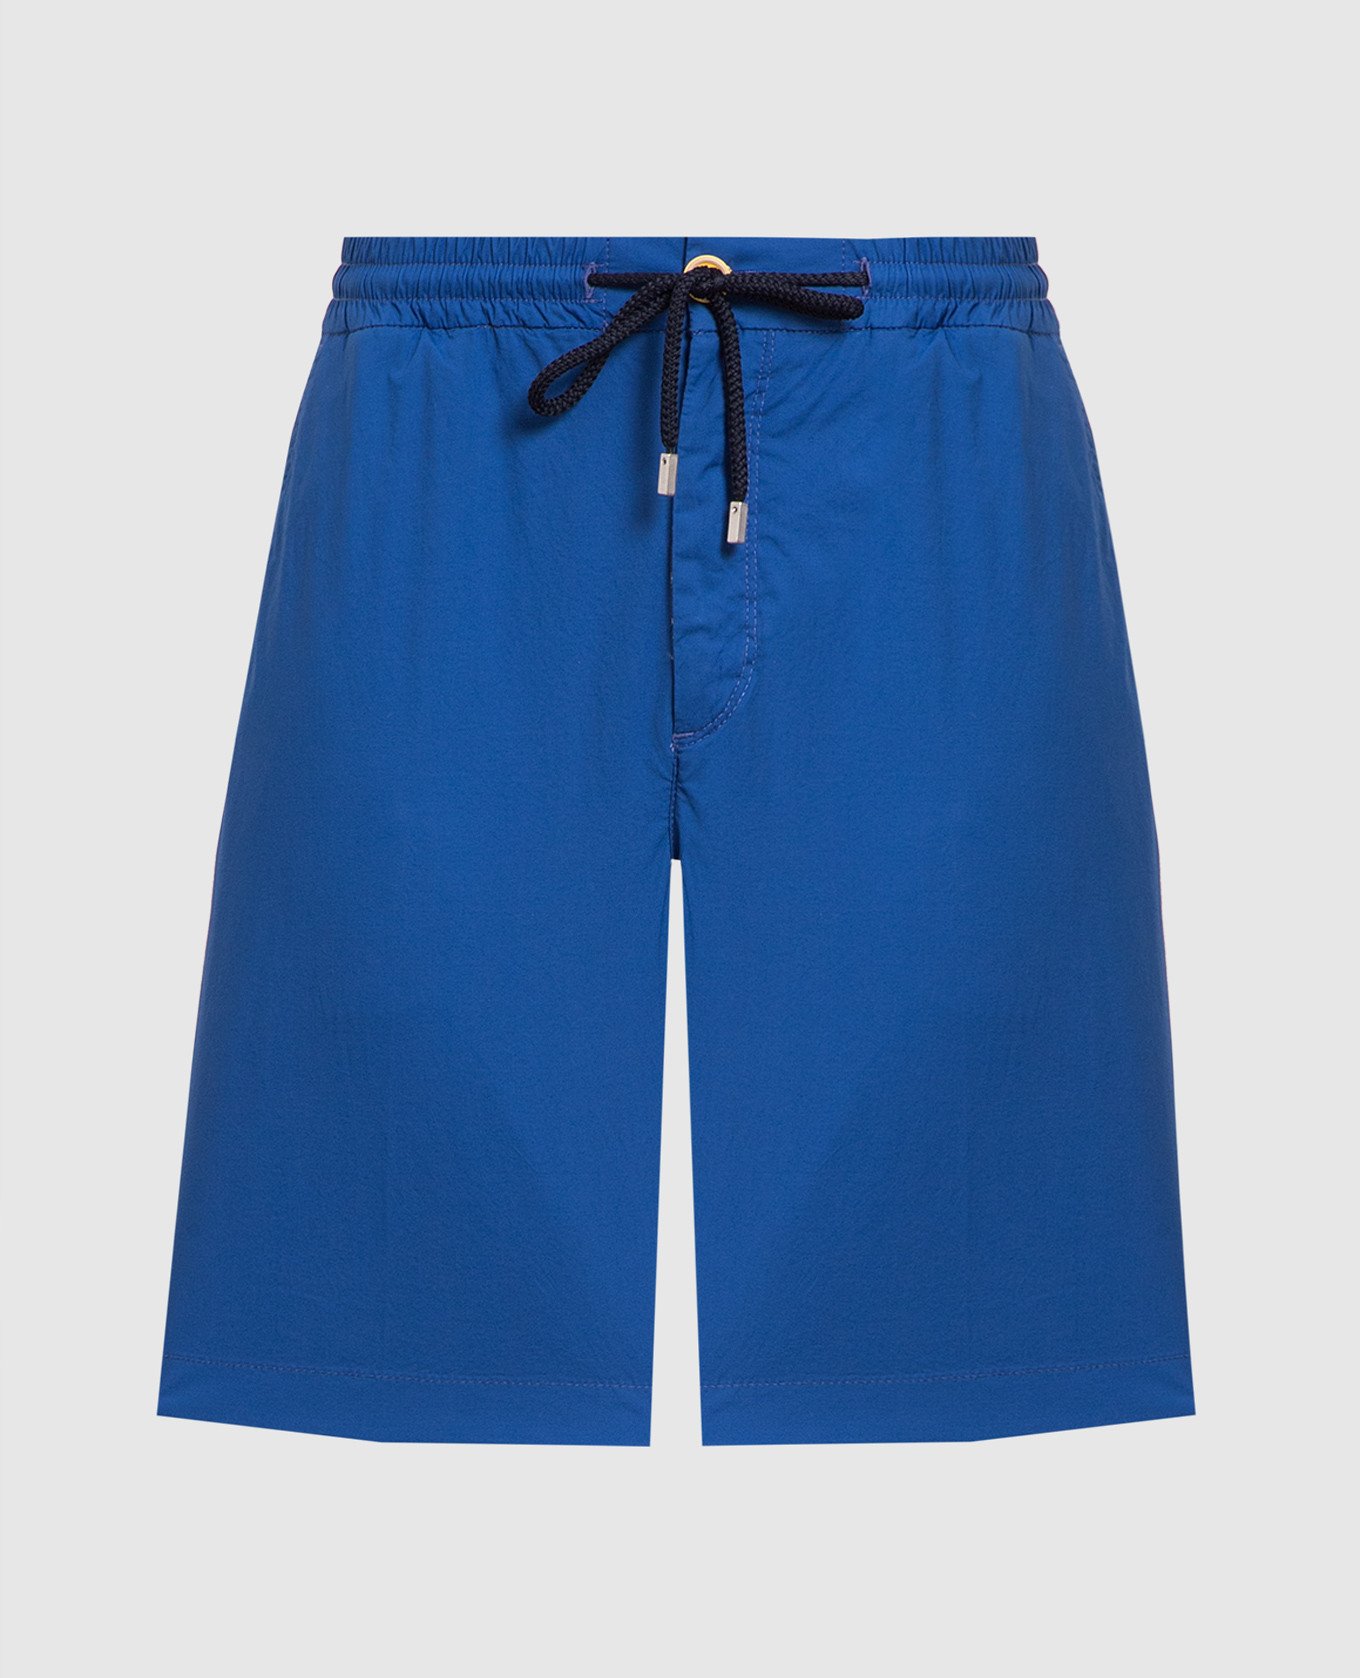 Levant blue shorts